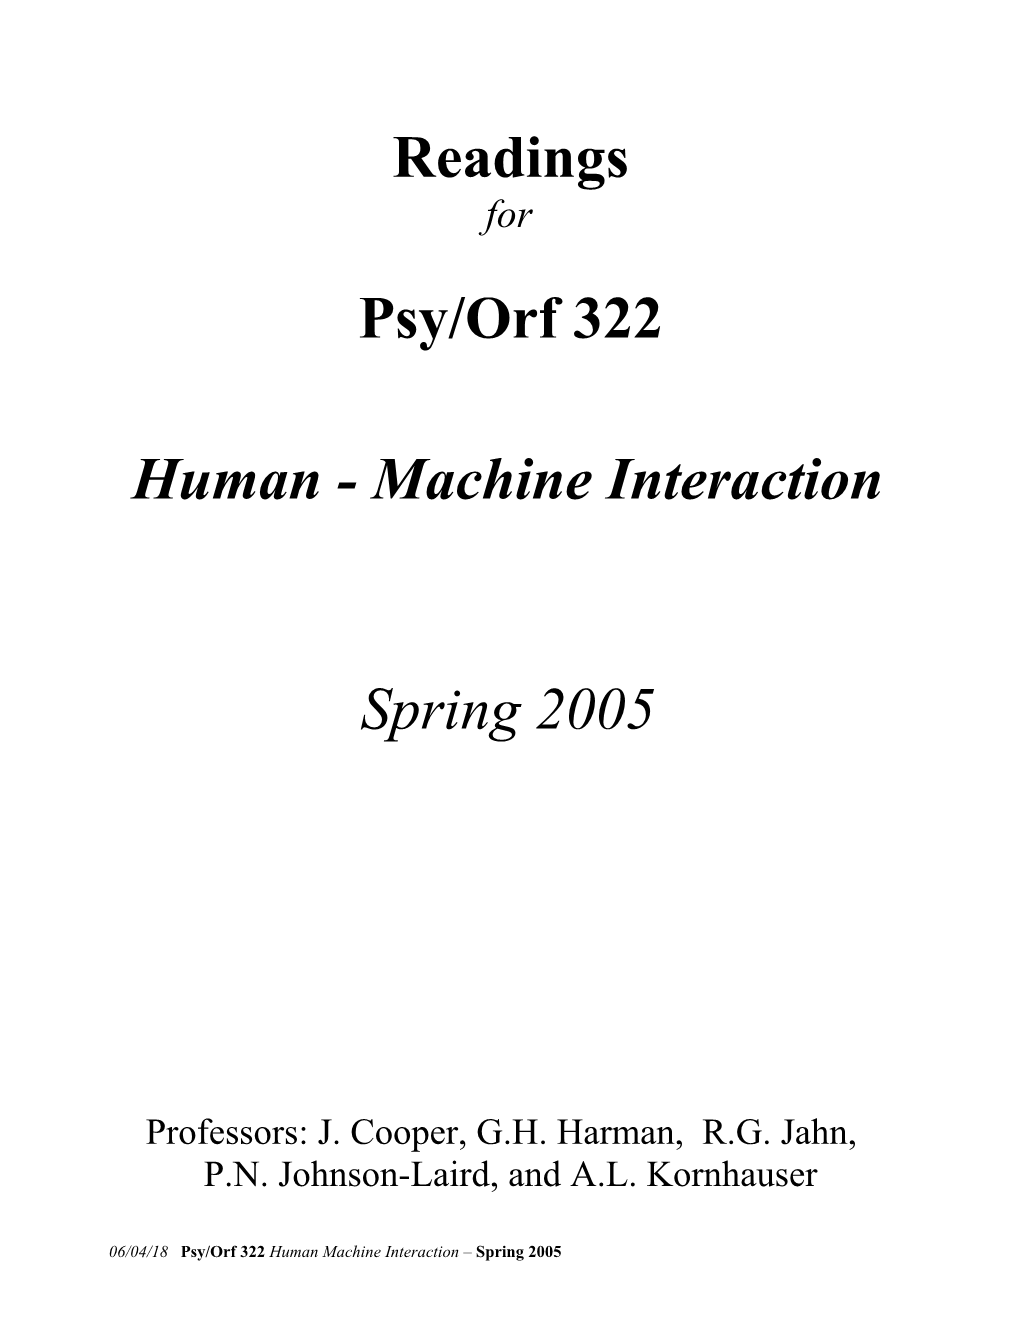 Human - Machine Interaction